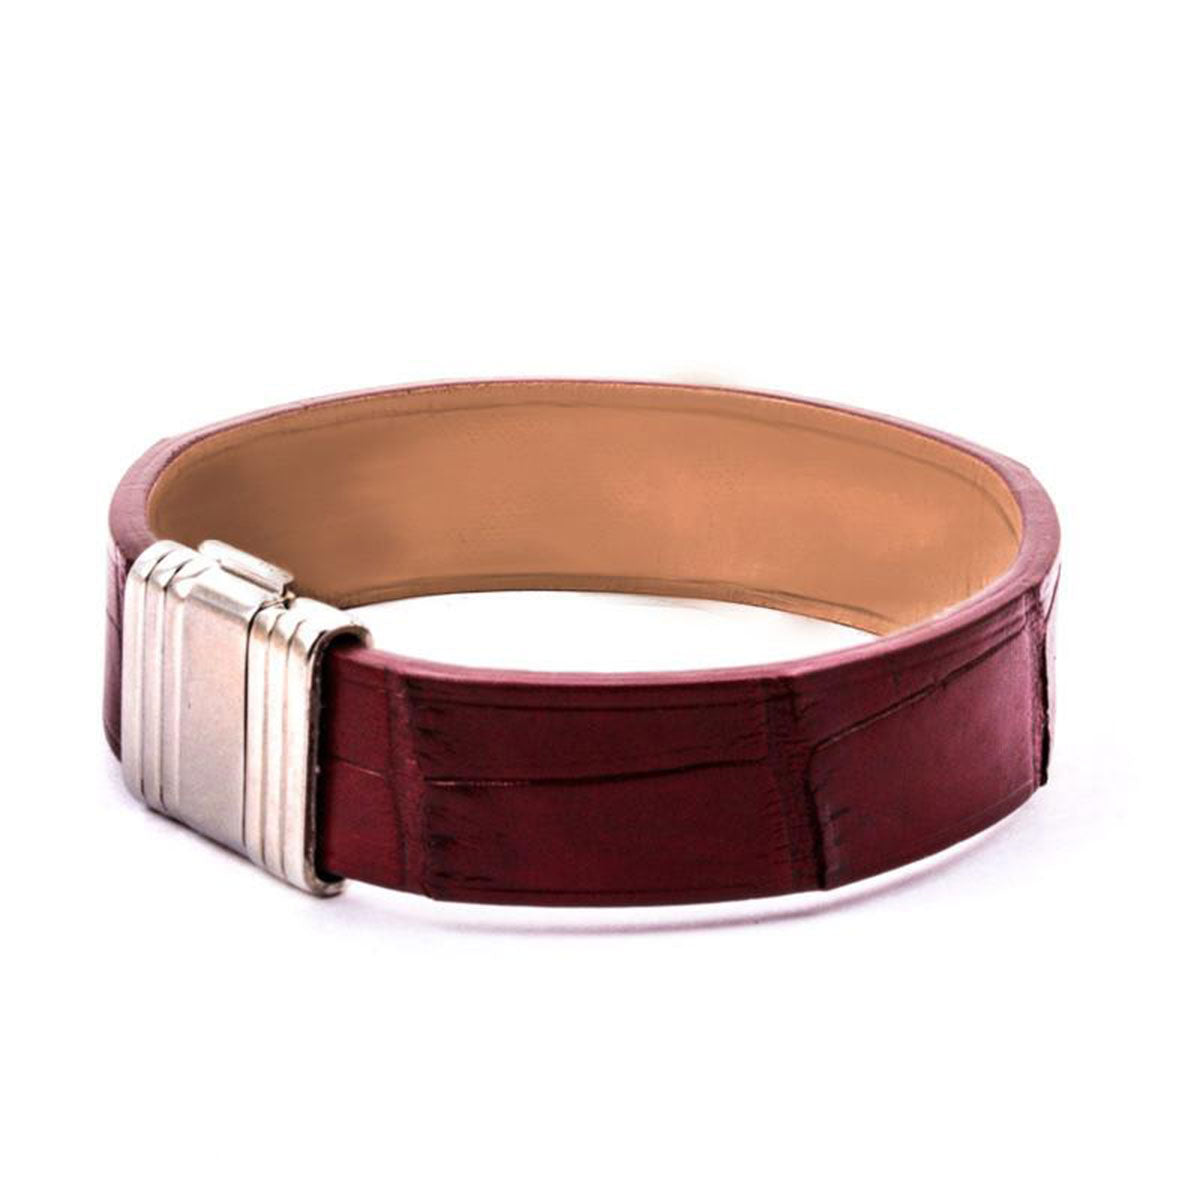 Aftermarket Bracelet/Strap Brown Leather Strap for Louis Vuitton Tambour in Crocodile/Alligator Grain